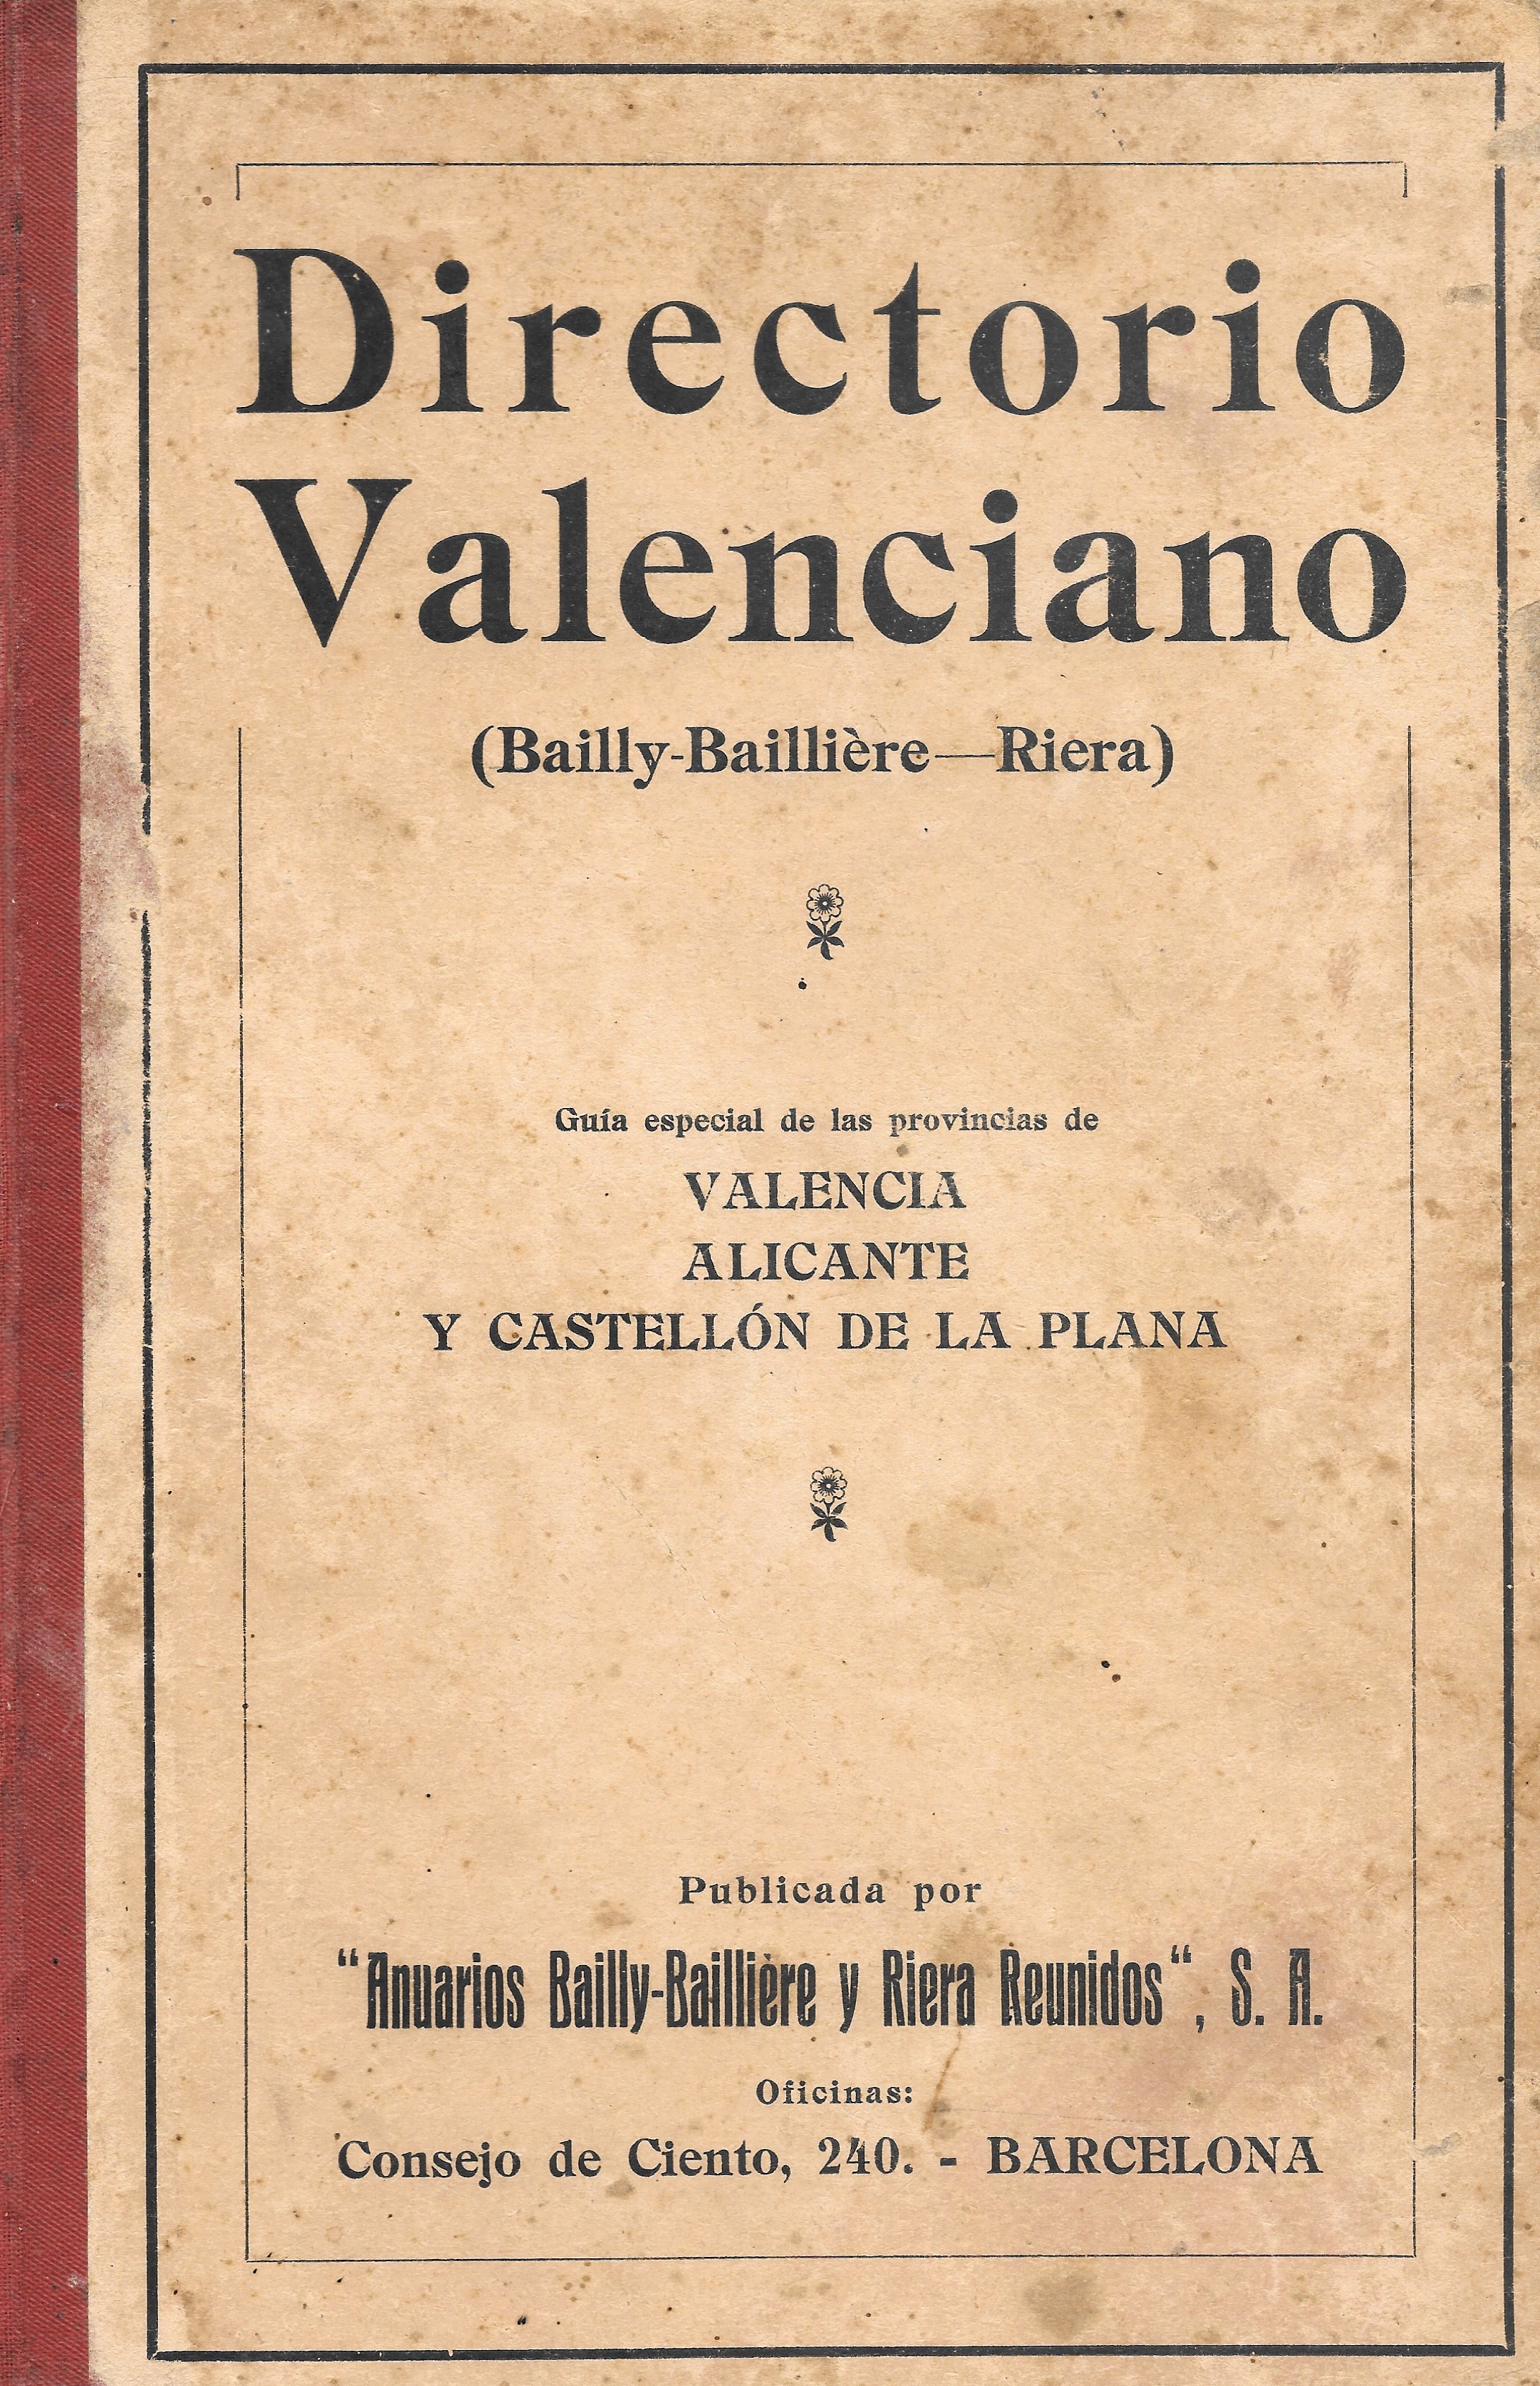 Directorio Valenciano 1926 (Bailly-Baillière-Riera) 